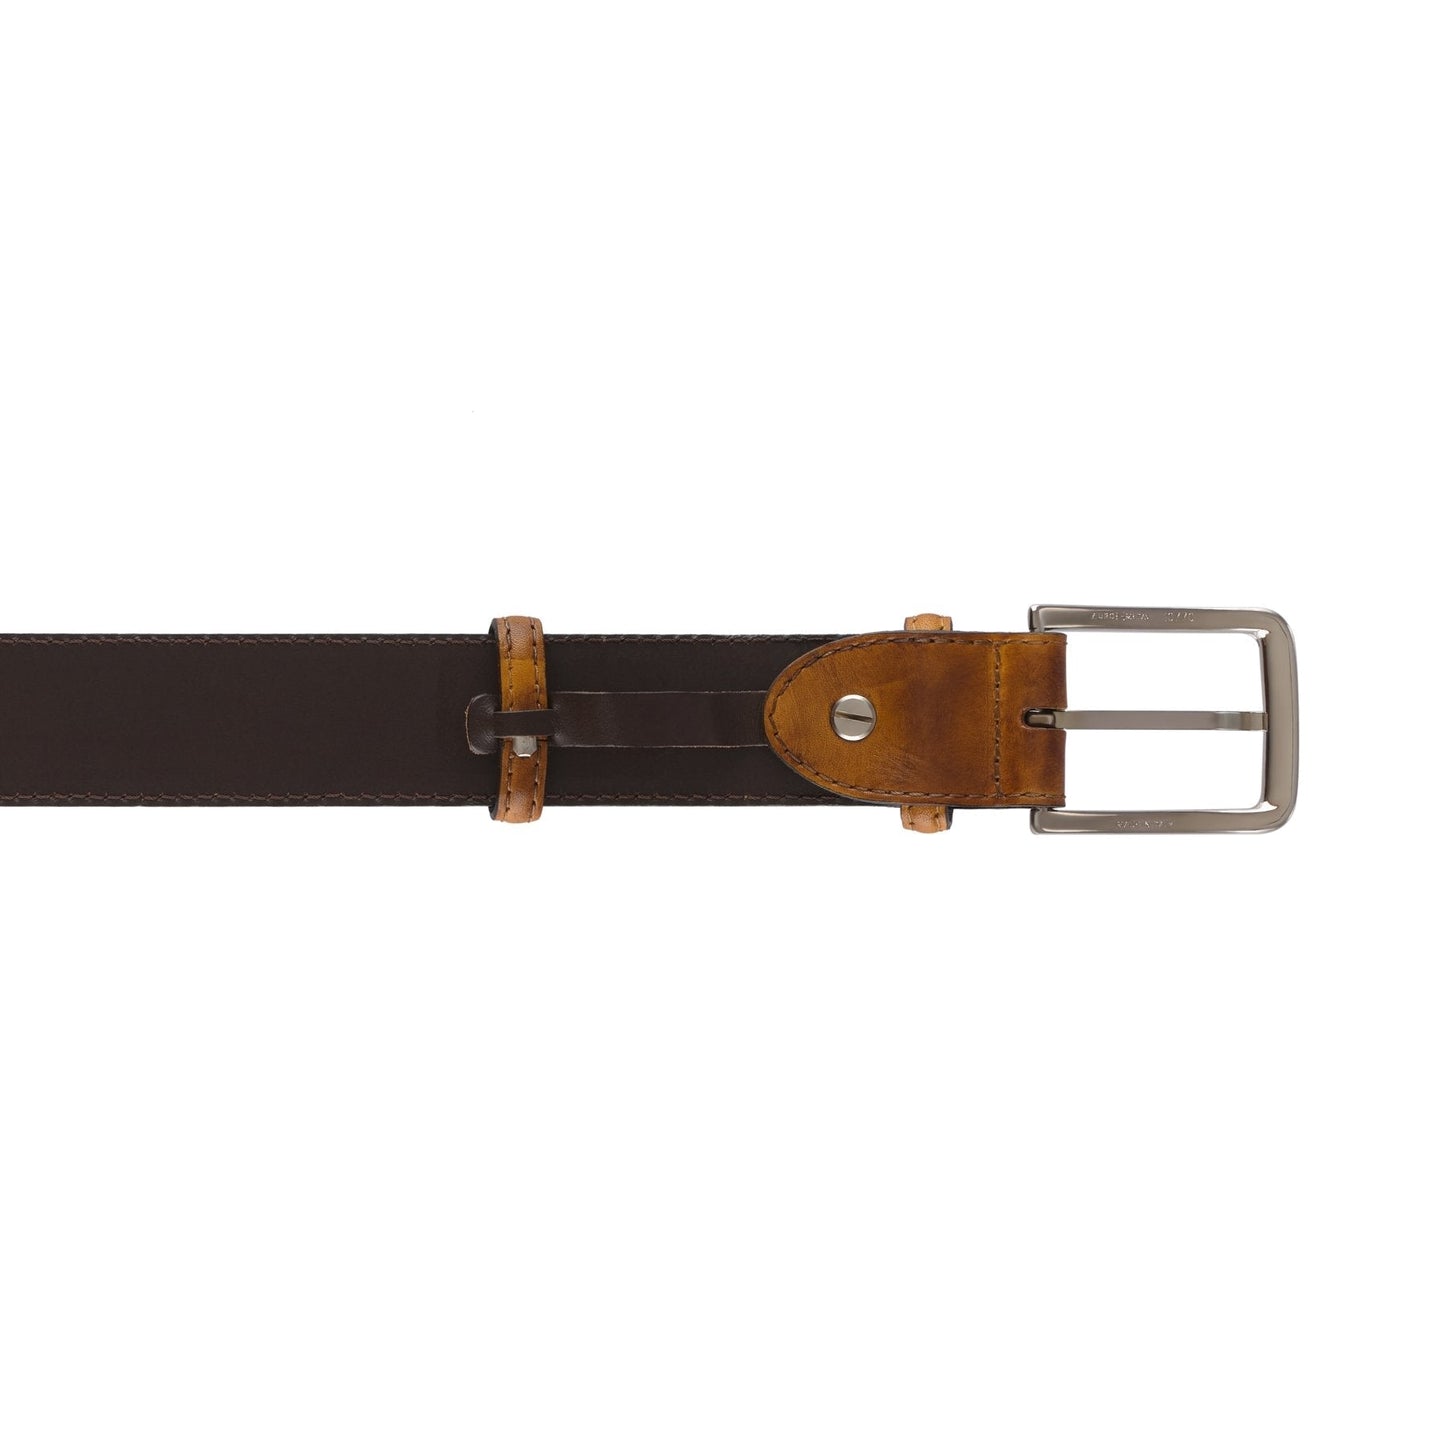 Bontoni Leather Belt in Brown - SARTALE